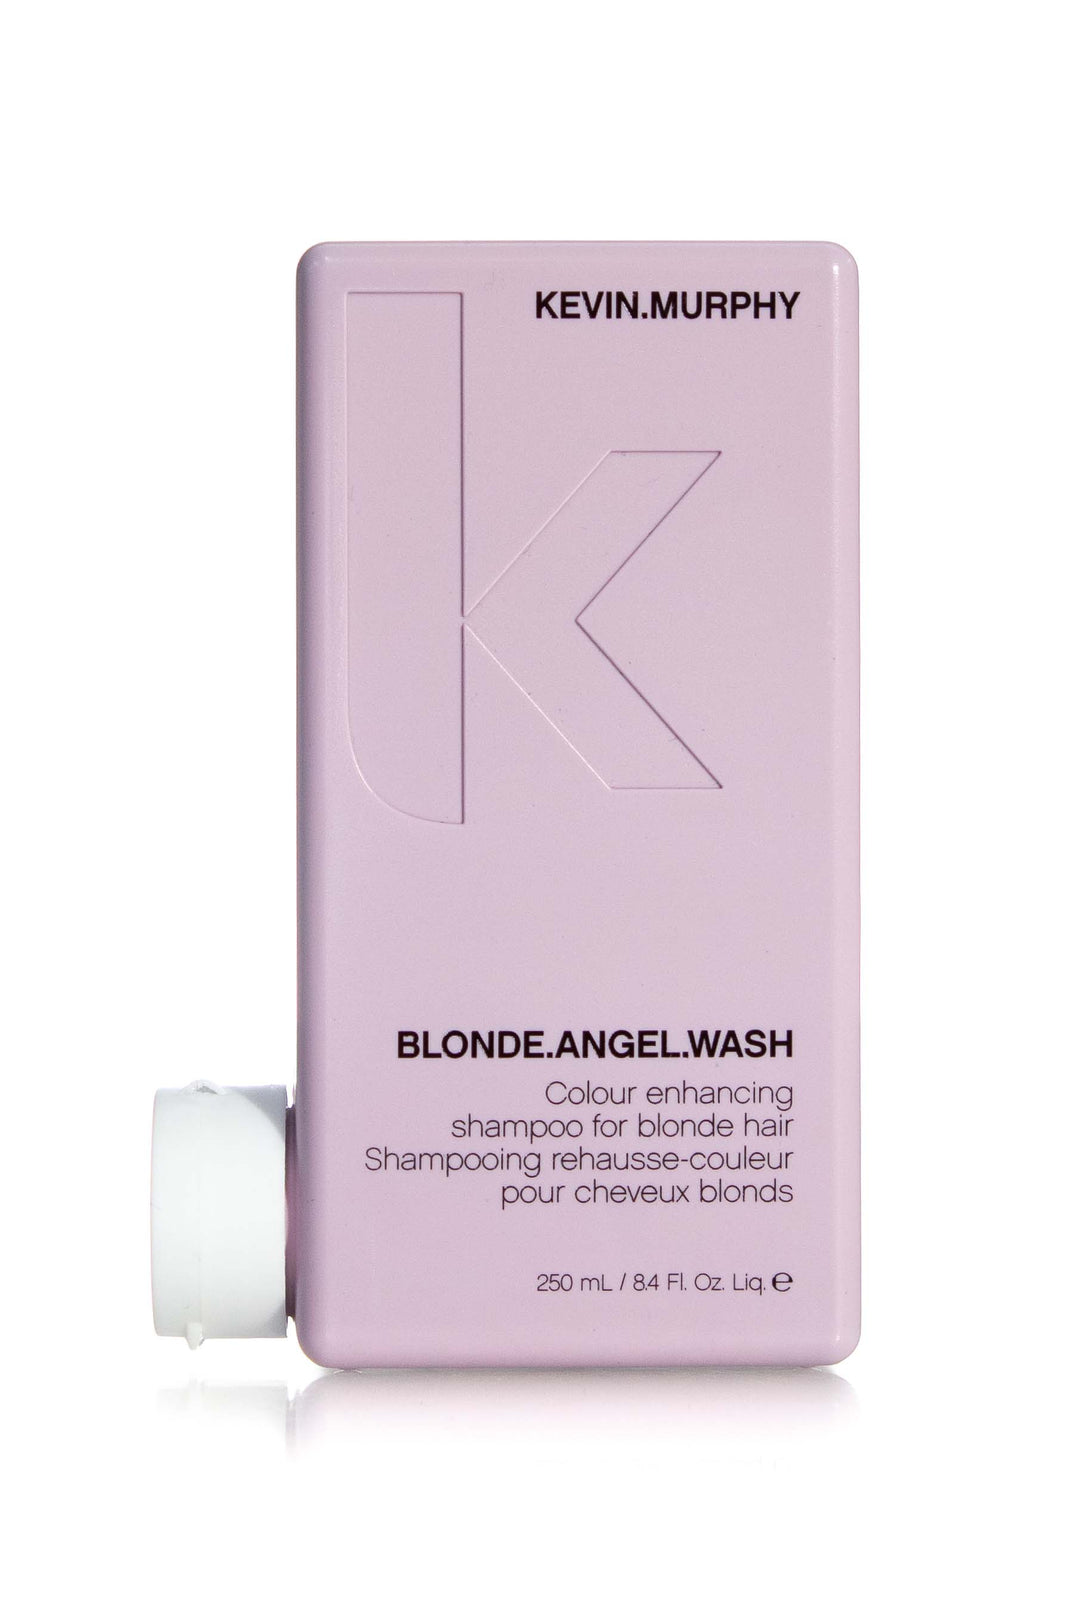 Kevin Murphy Blonde Angel Wash